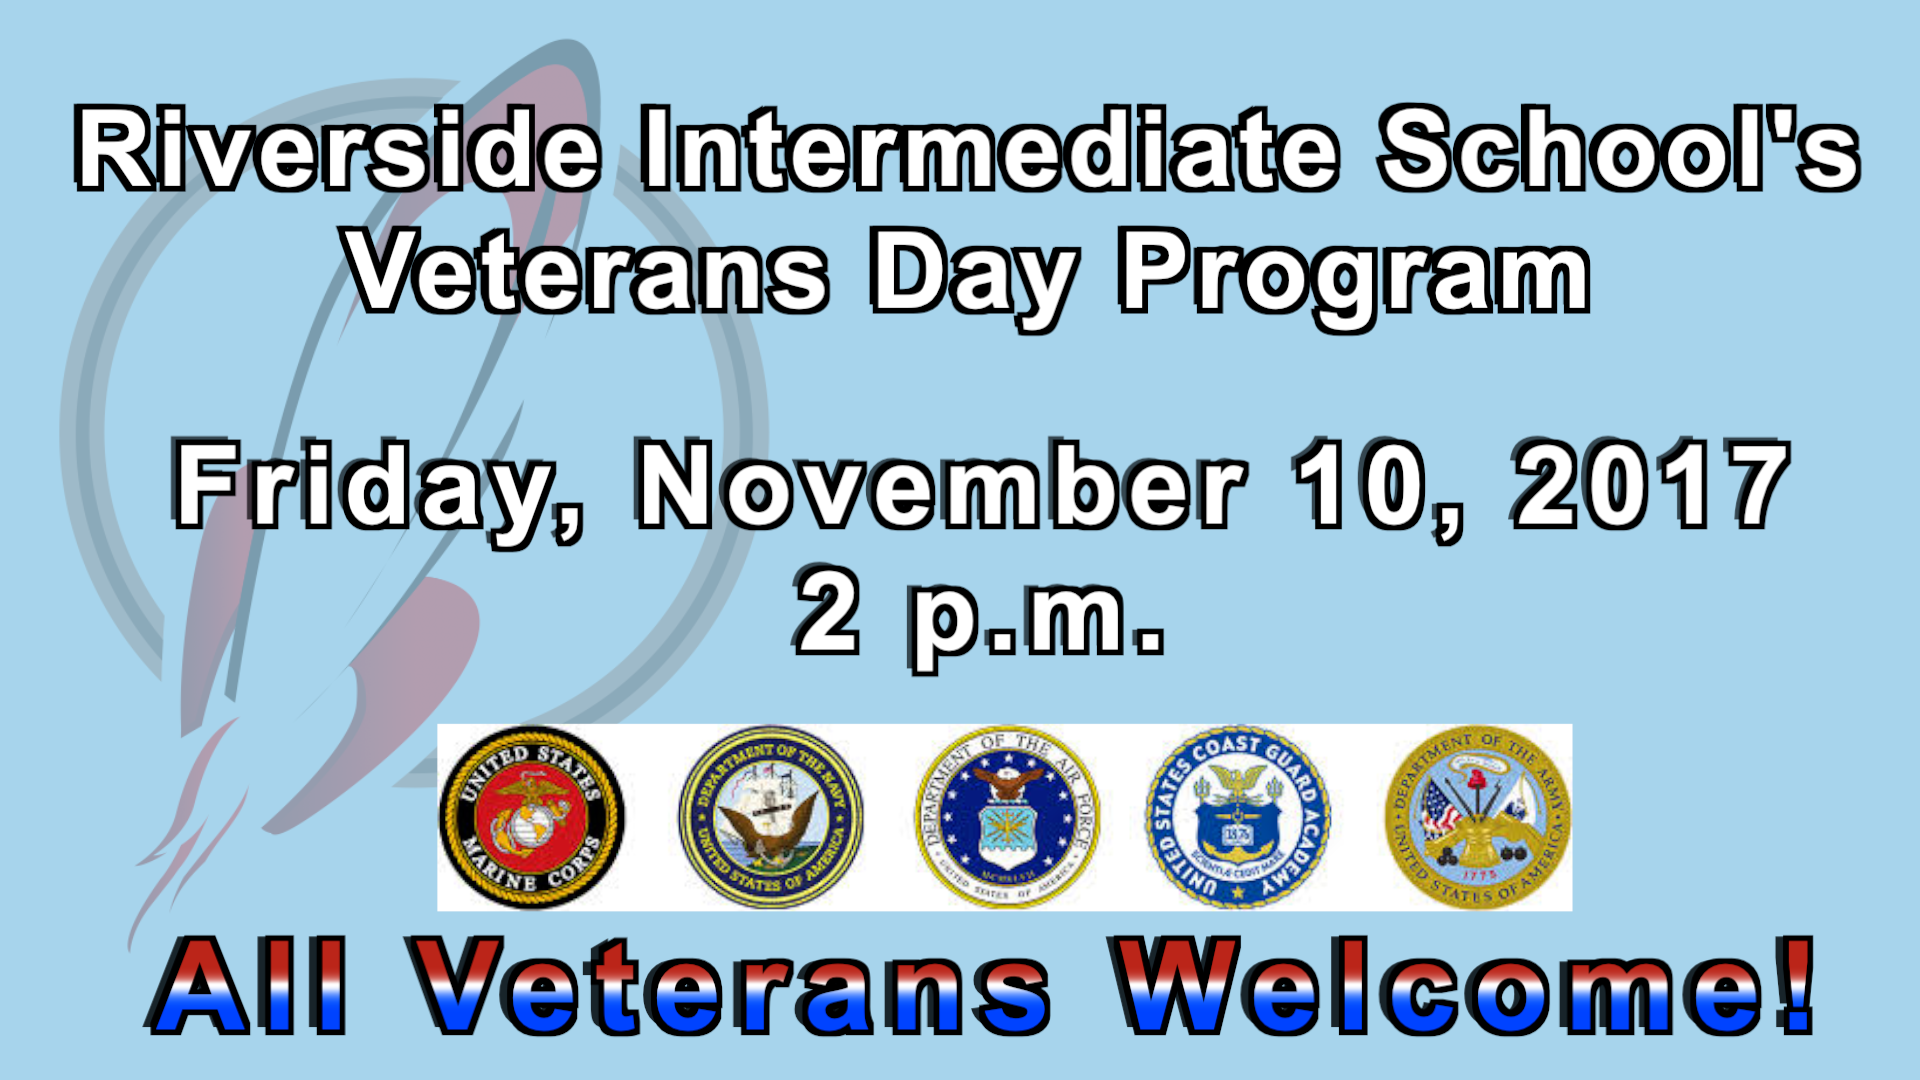 Veterans Day Program at Riverside at 2 p.m.